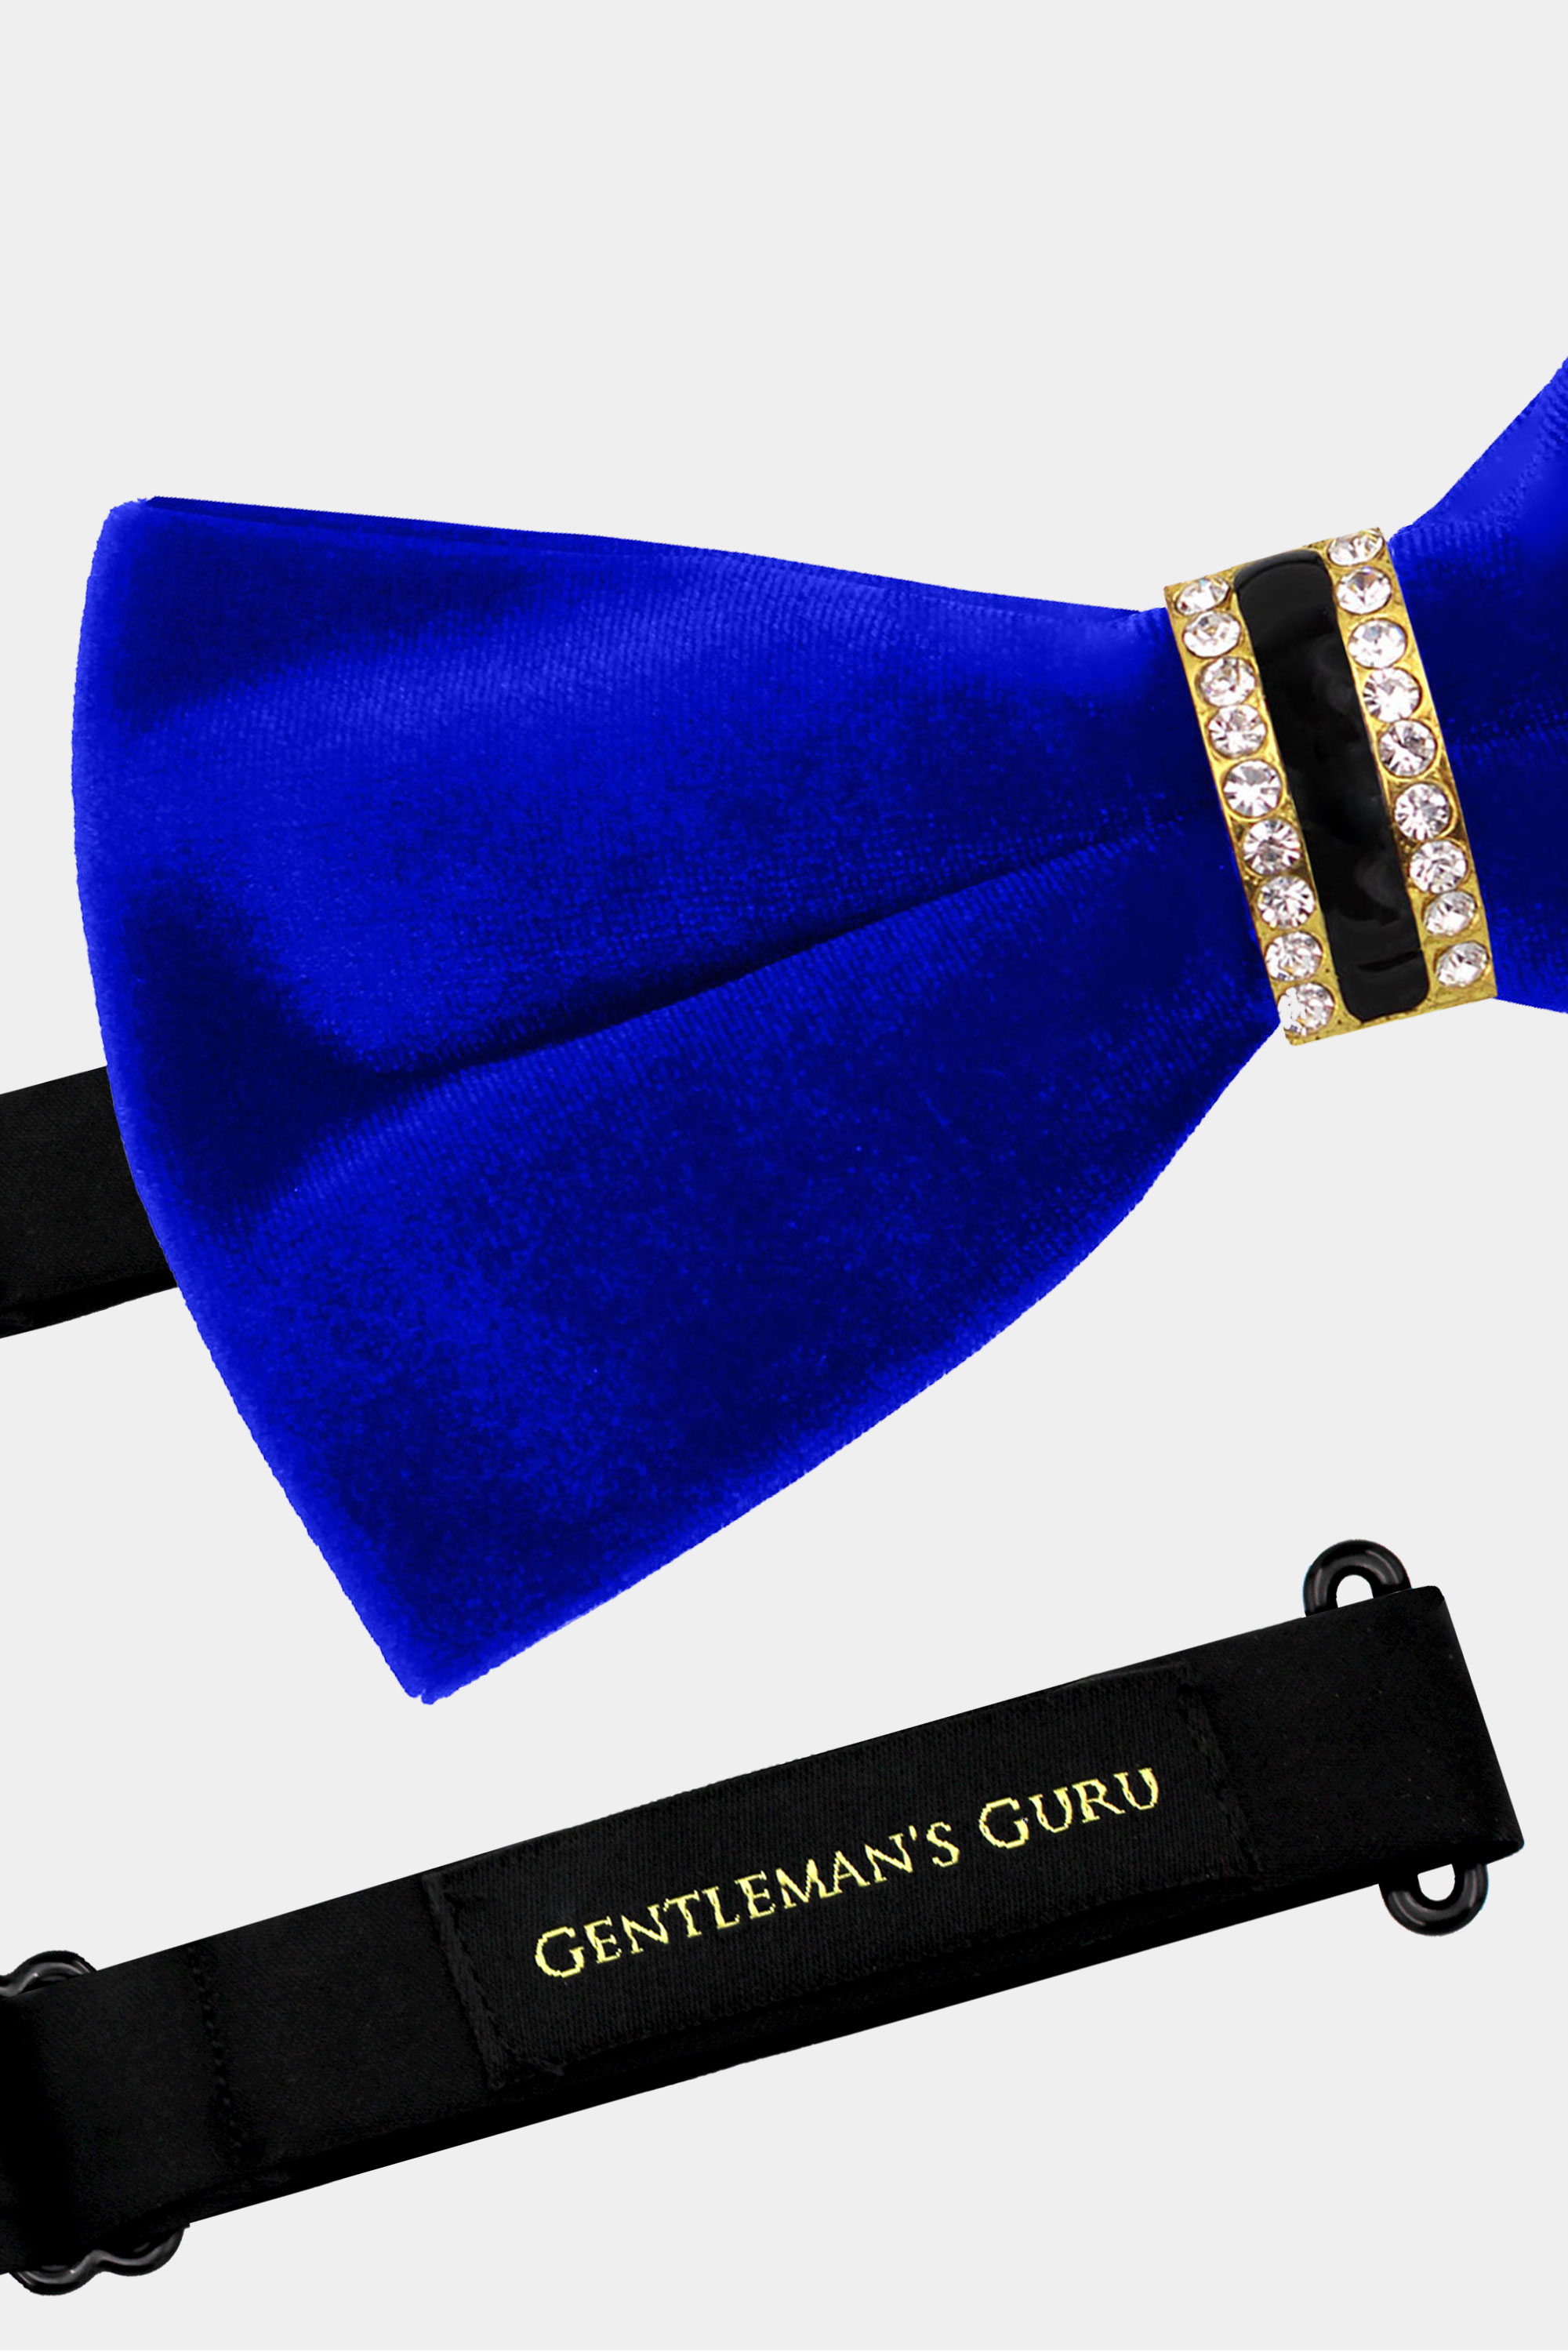 Crystal-Royal-Blue-Velvet-Bow-Tie-from-Gentlemansguru.com